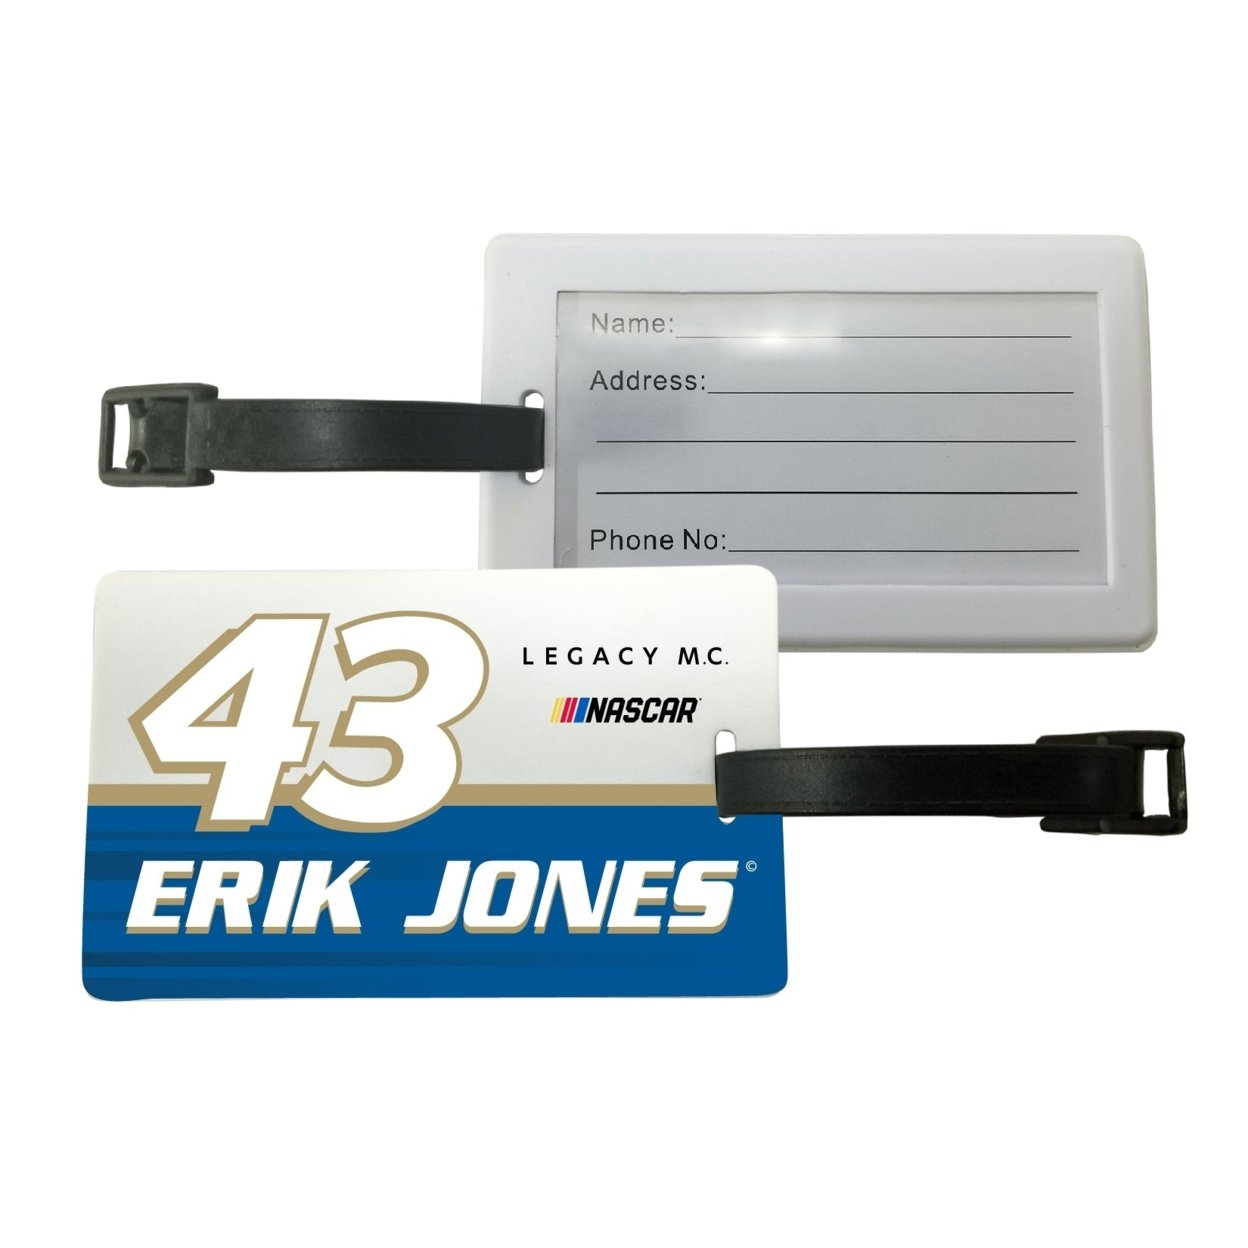 #43 Erik Jones Officially Licensed Luggage Tag